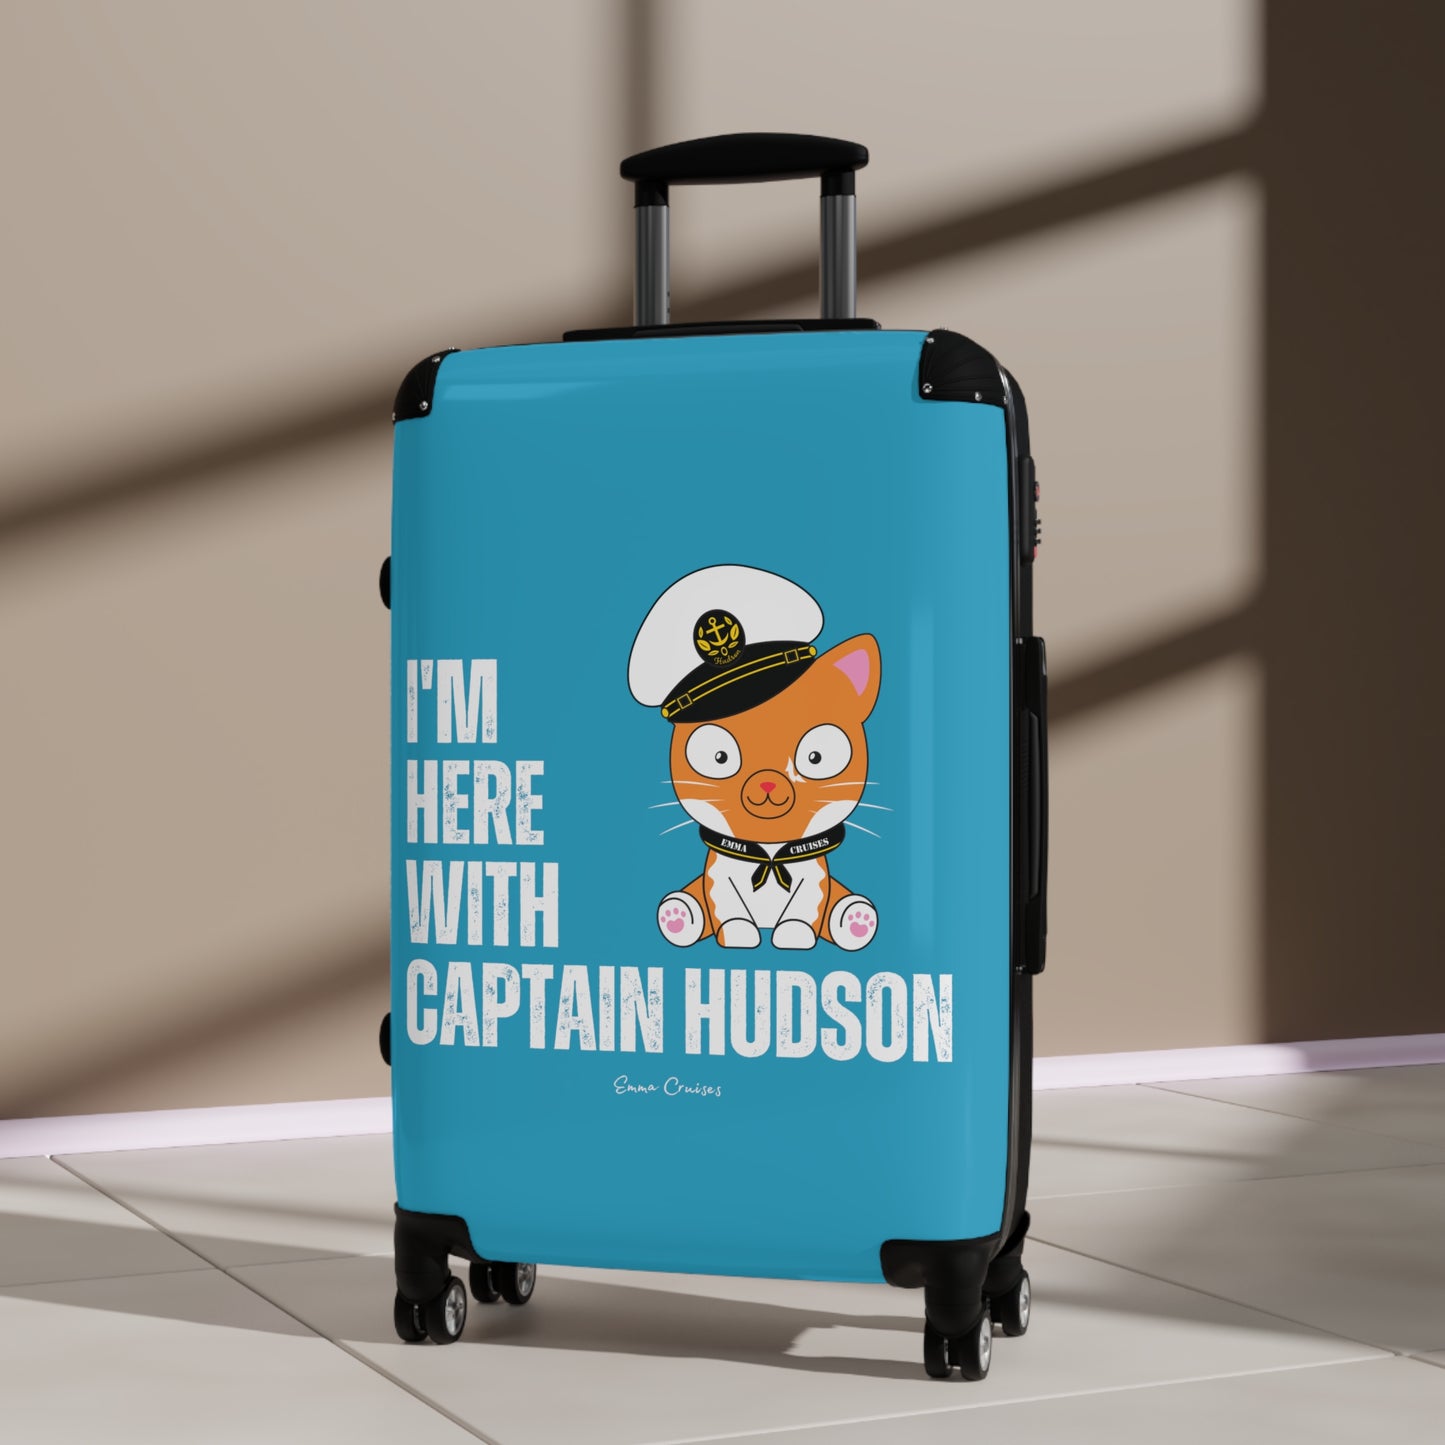 I'm With Captain Hudson - Suitcase